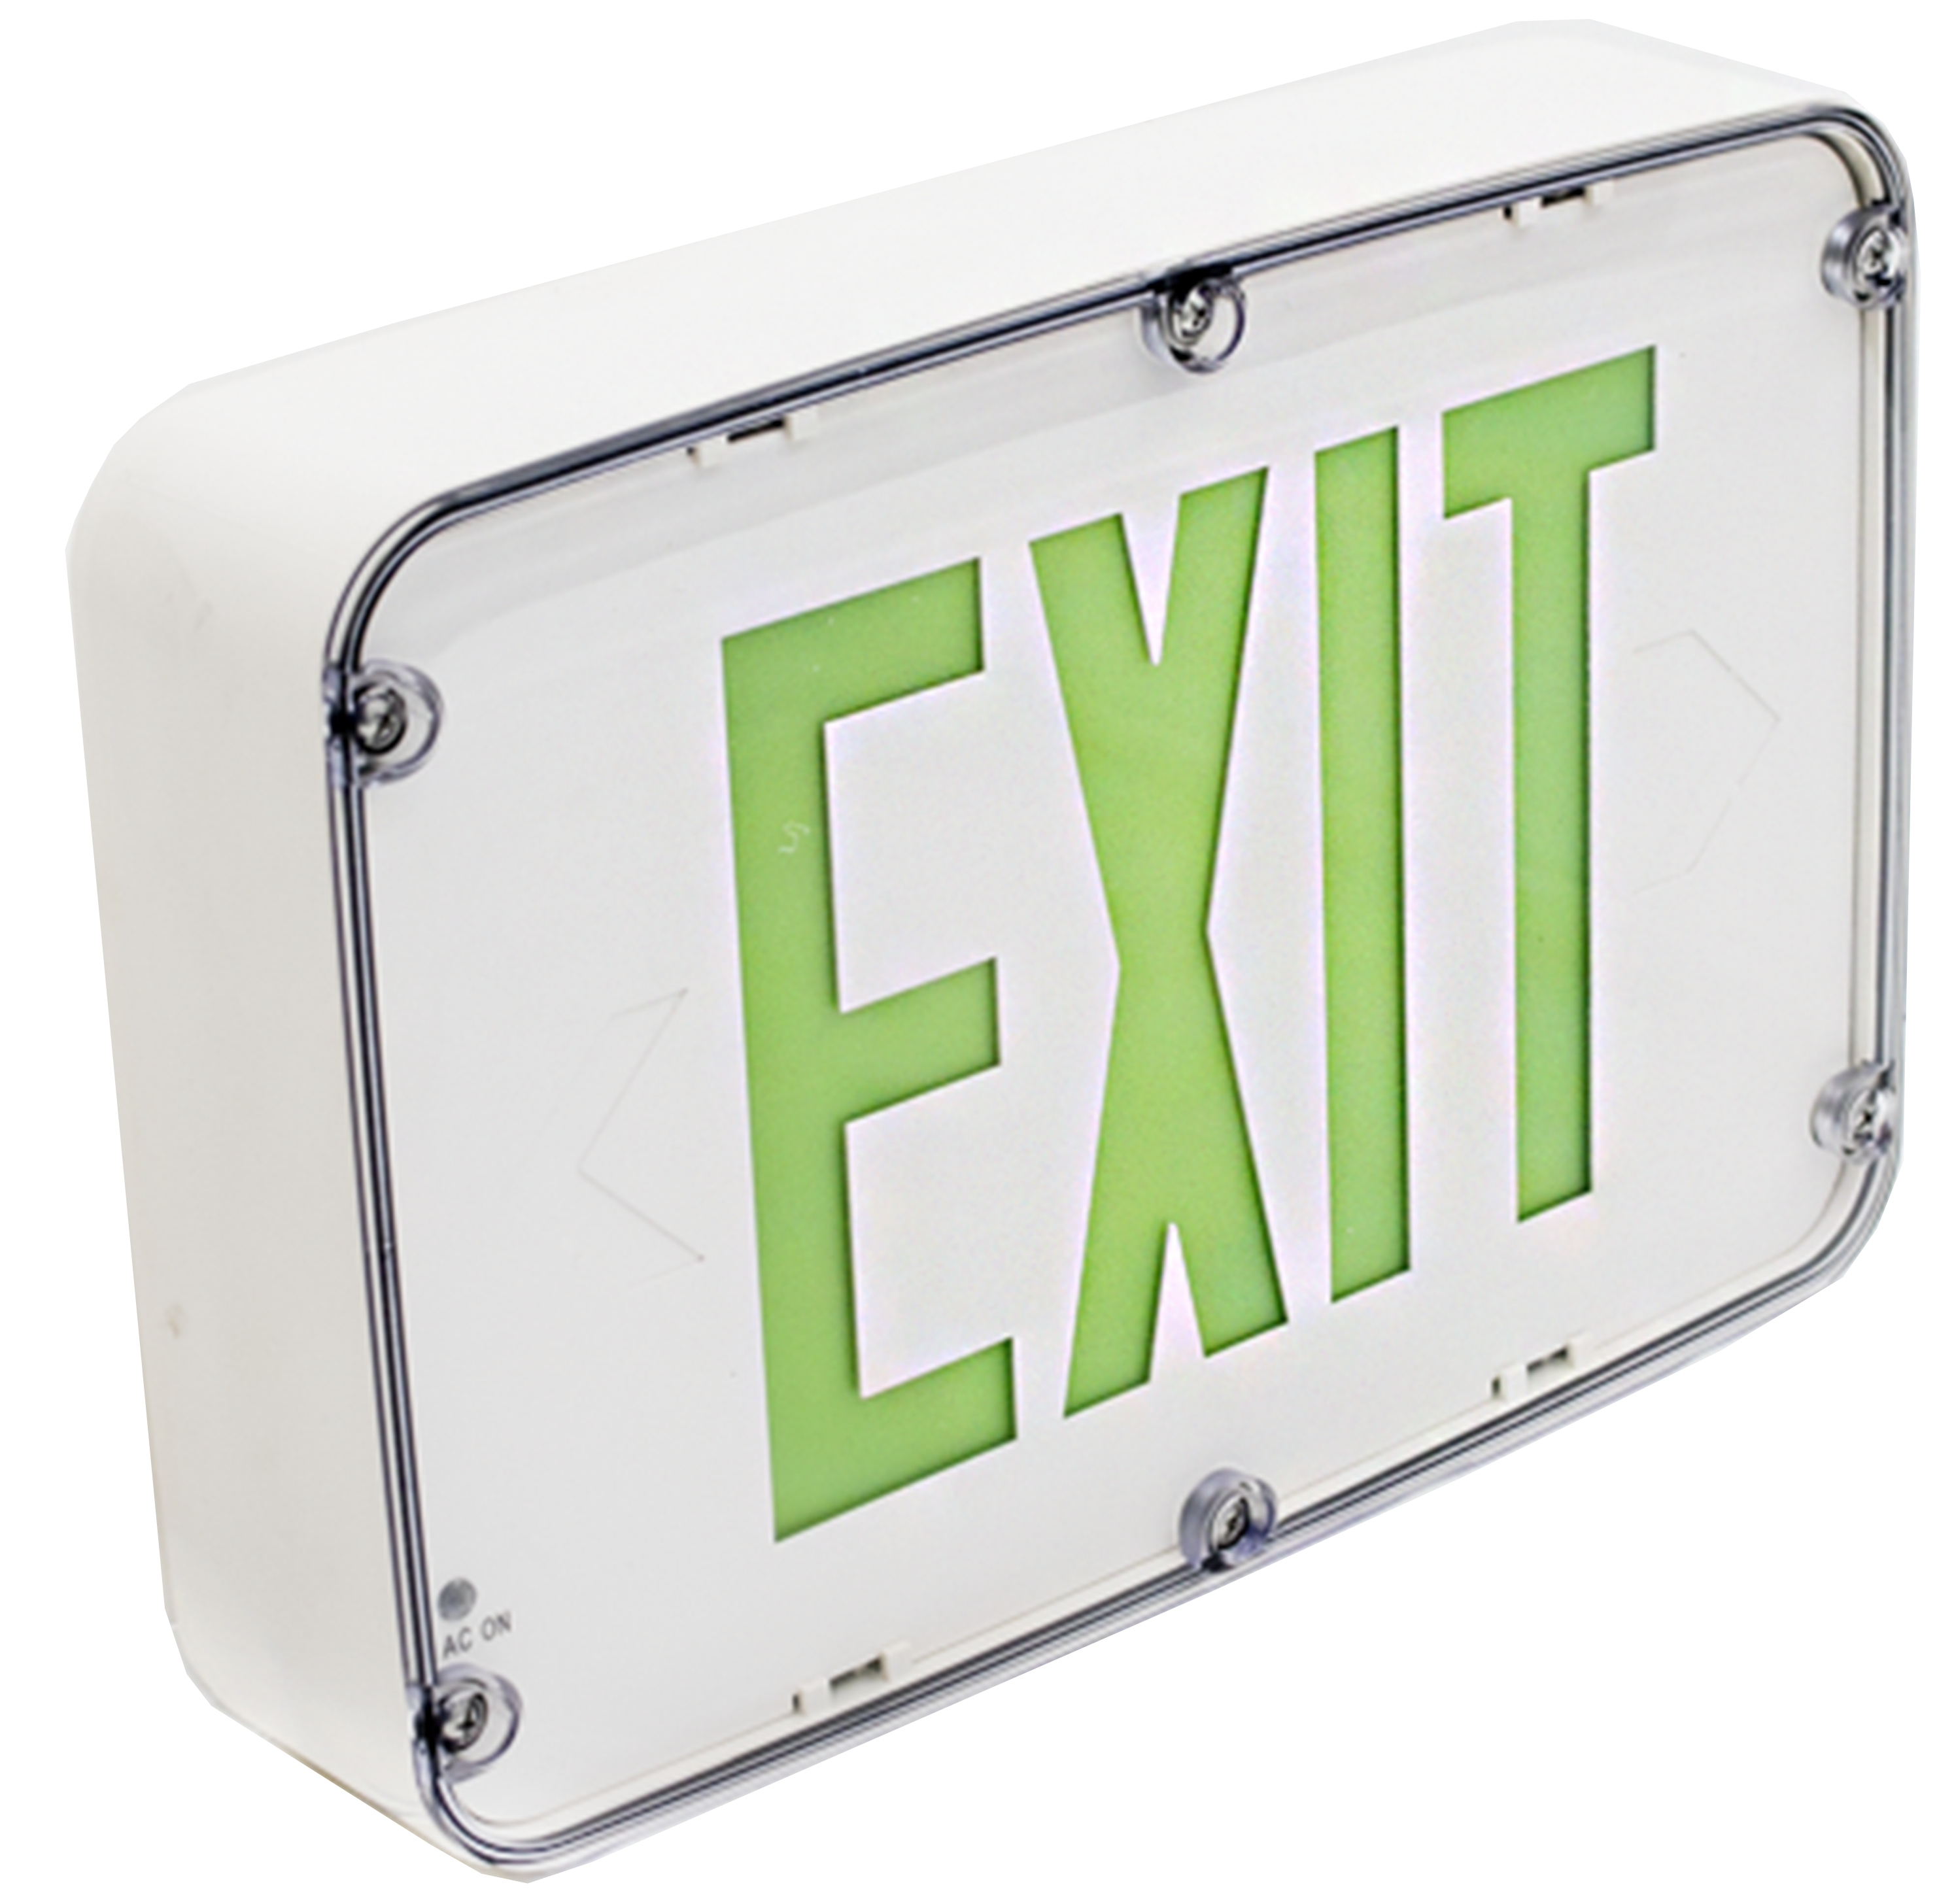 Westgate XTN4X-2GW Nema 4x Rated LED Exit Sign, Double Face, Green Letters, White Panel